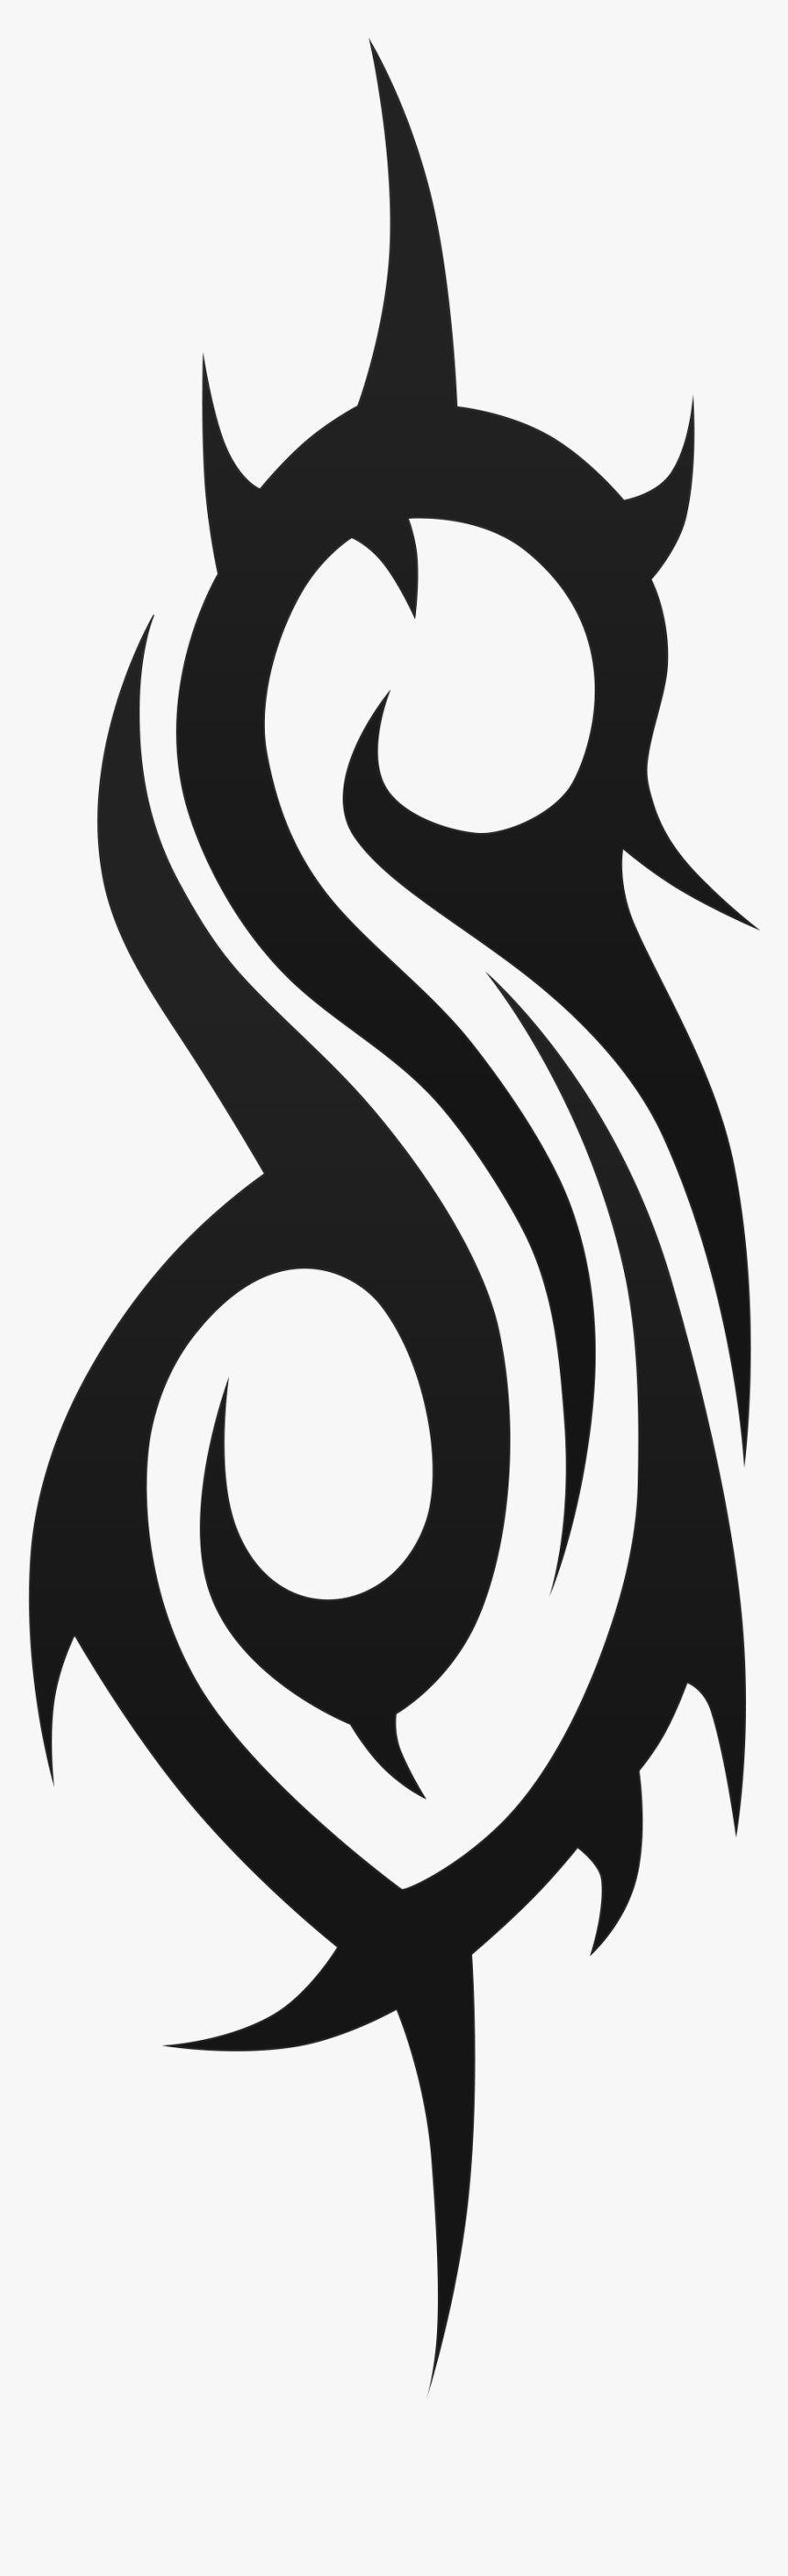 Слипкнот лого. Символ группы слипкнот. Логотип группы Slipknot.